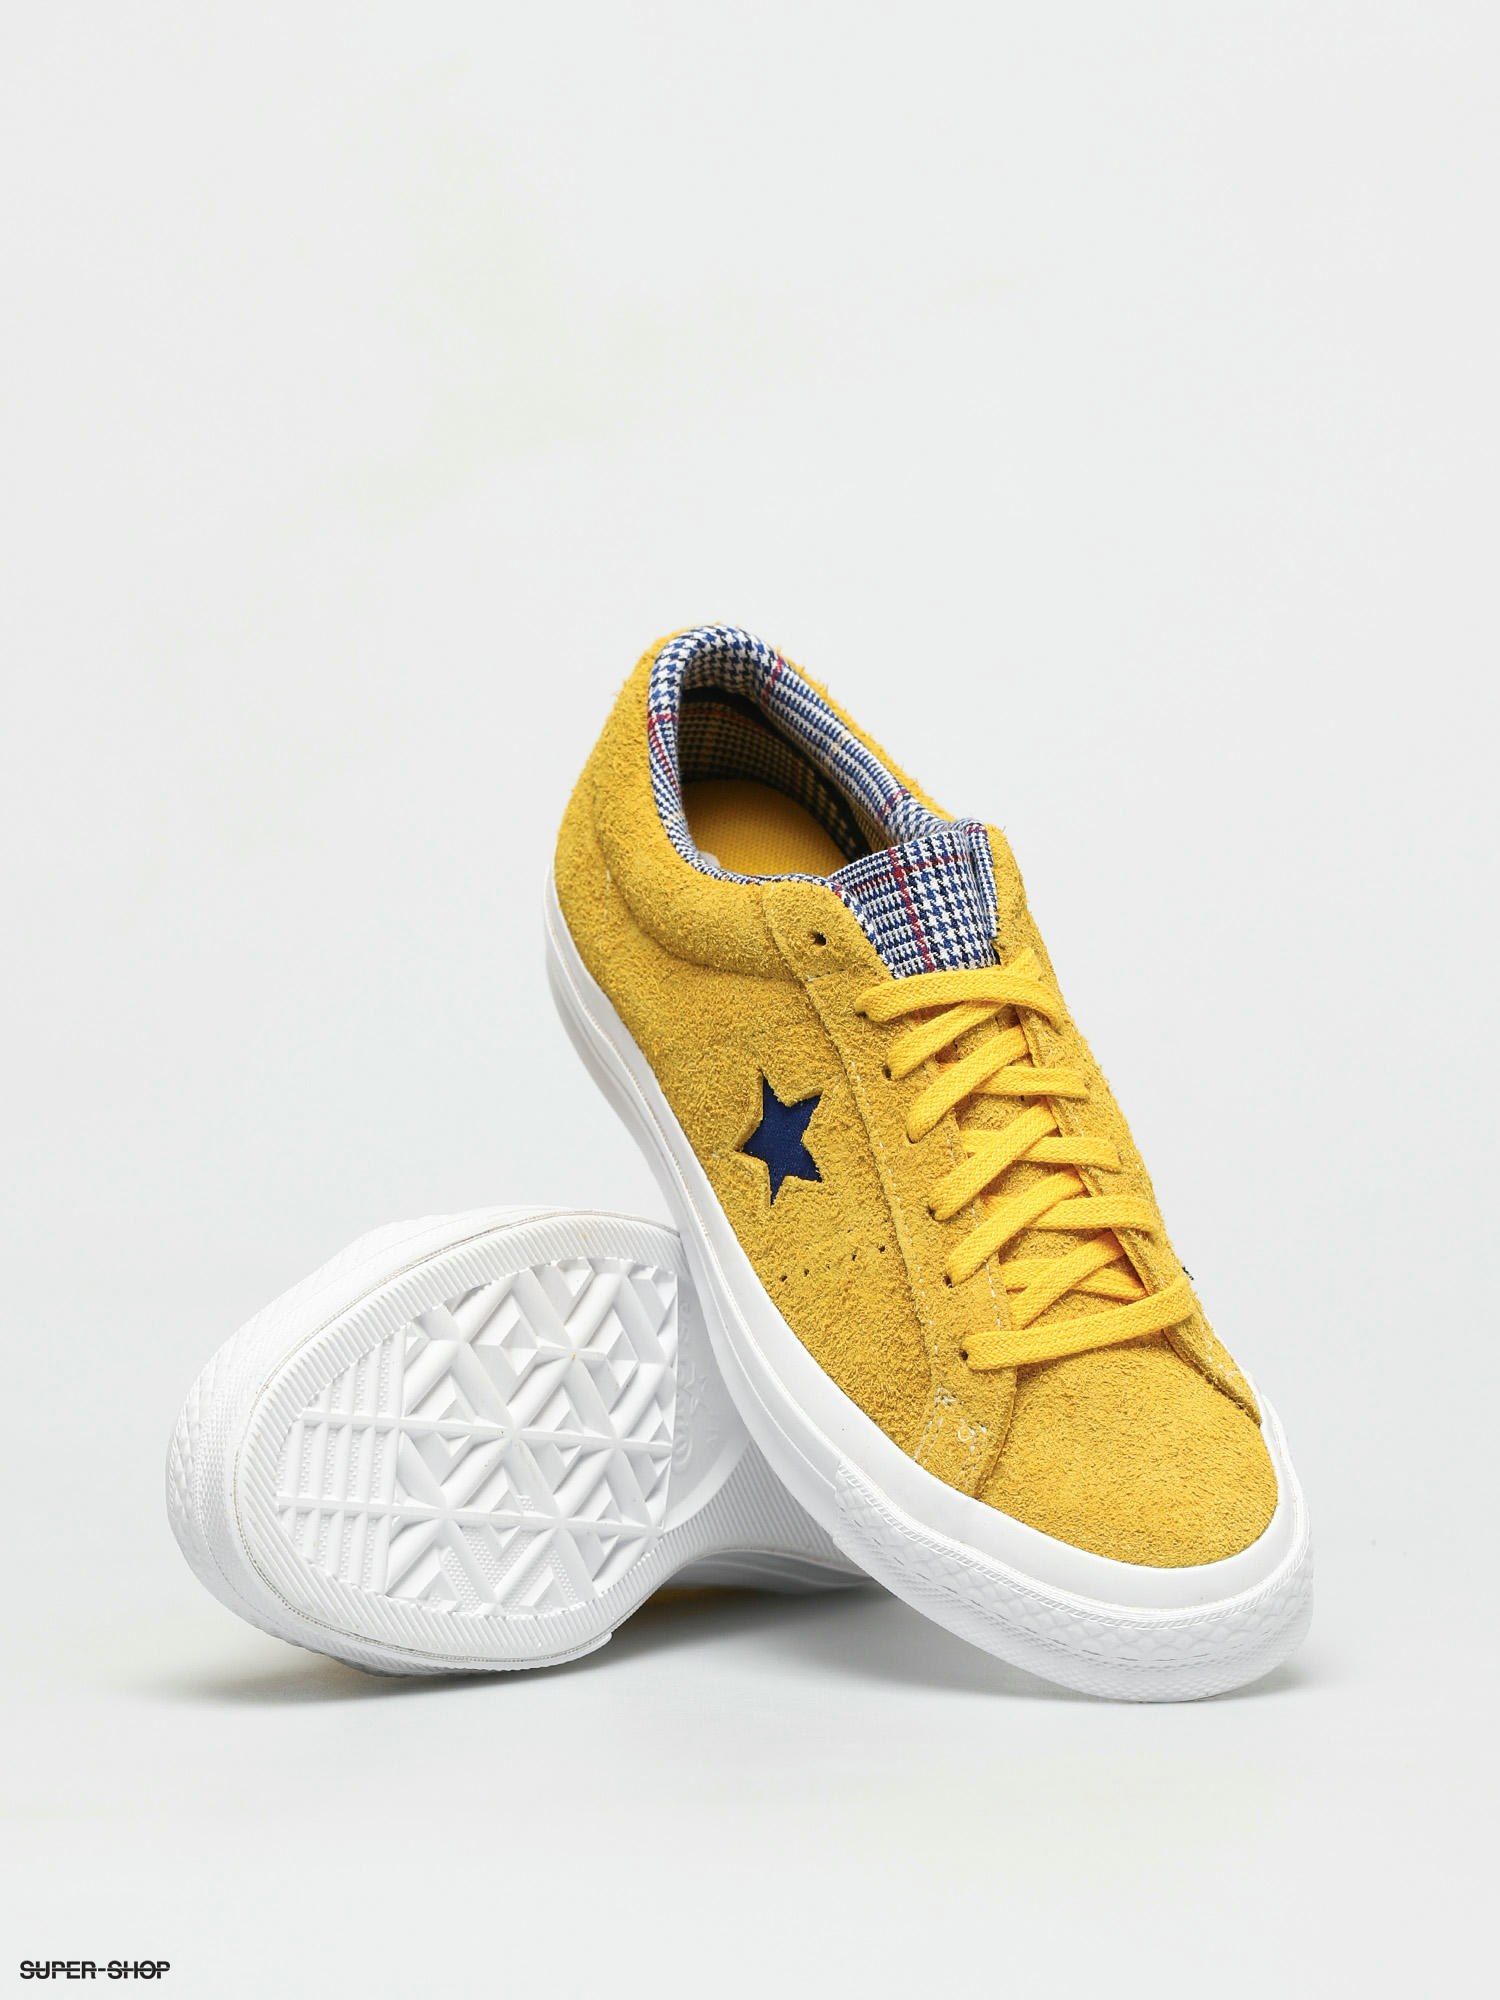 converse one star yellow on feet